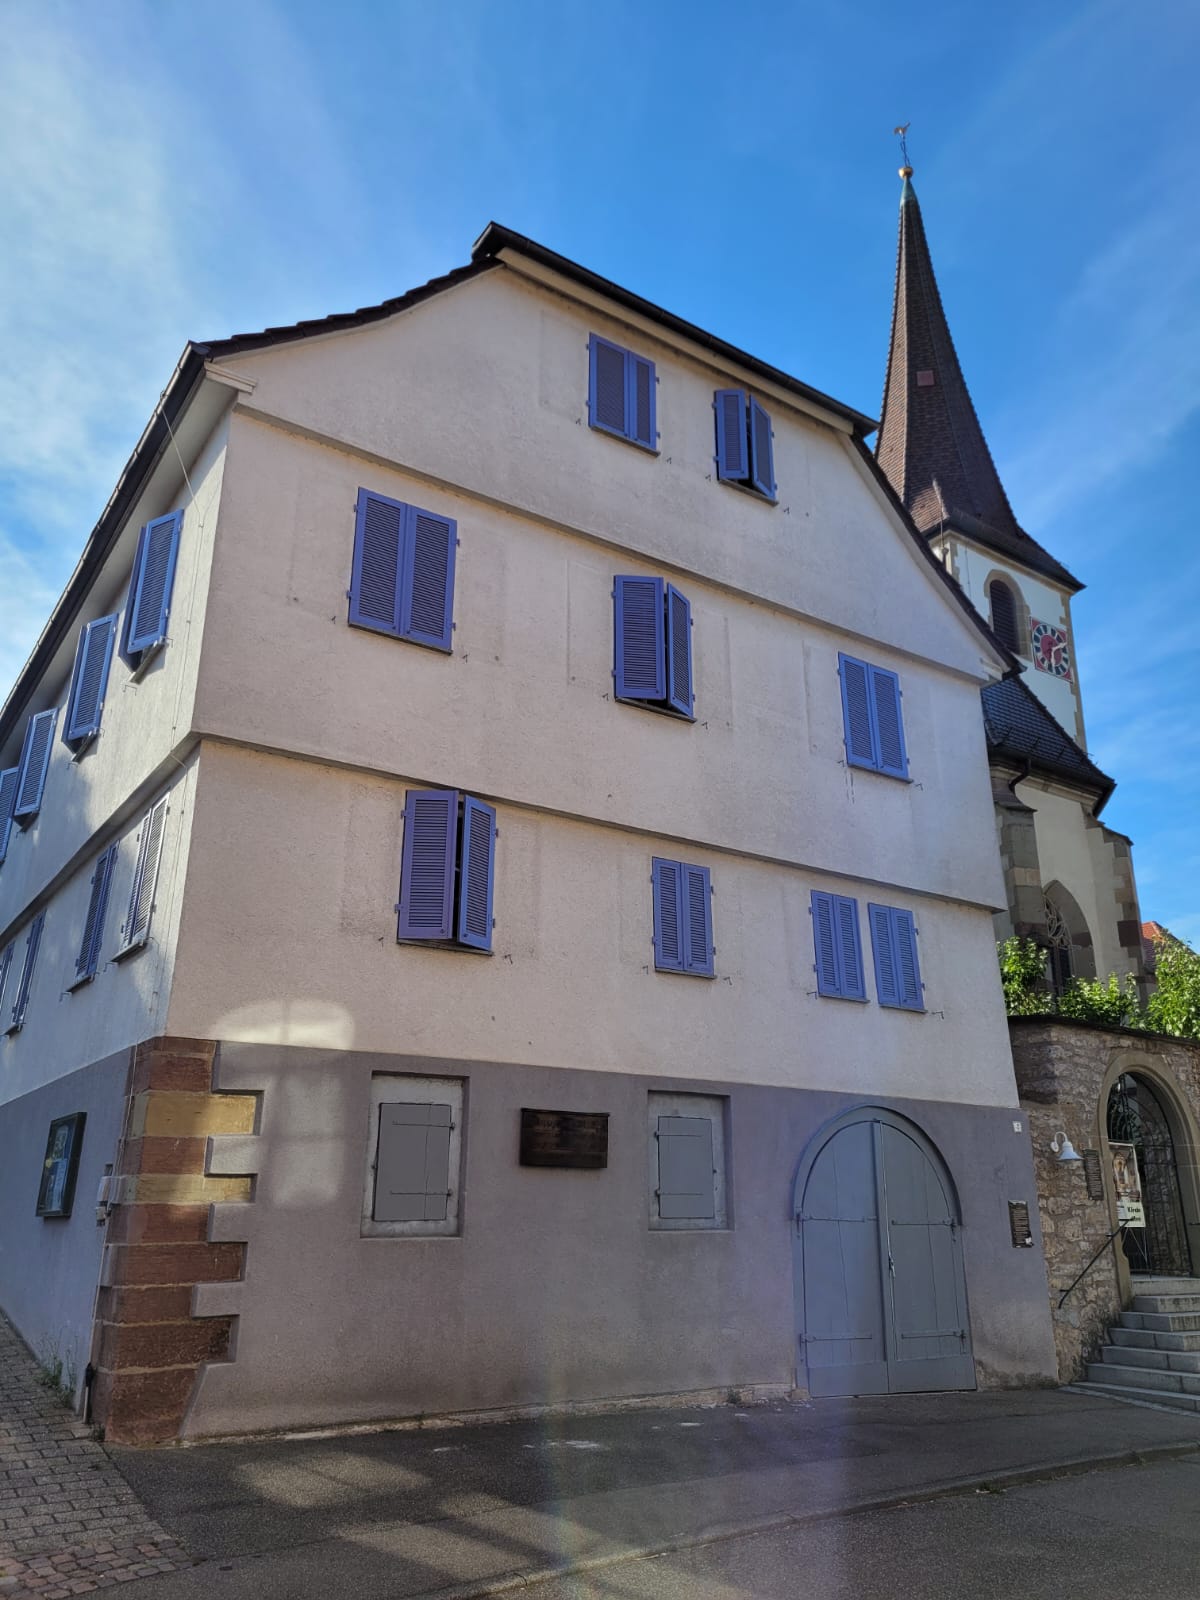 Neckargröninger Pfarrhaus mit Martinskirche, Beth Shalom e.V. Remseck, Haus des Friedens